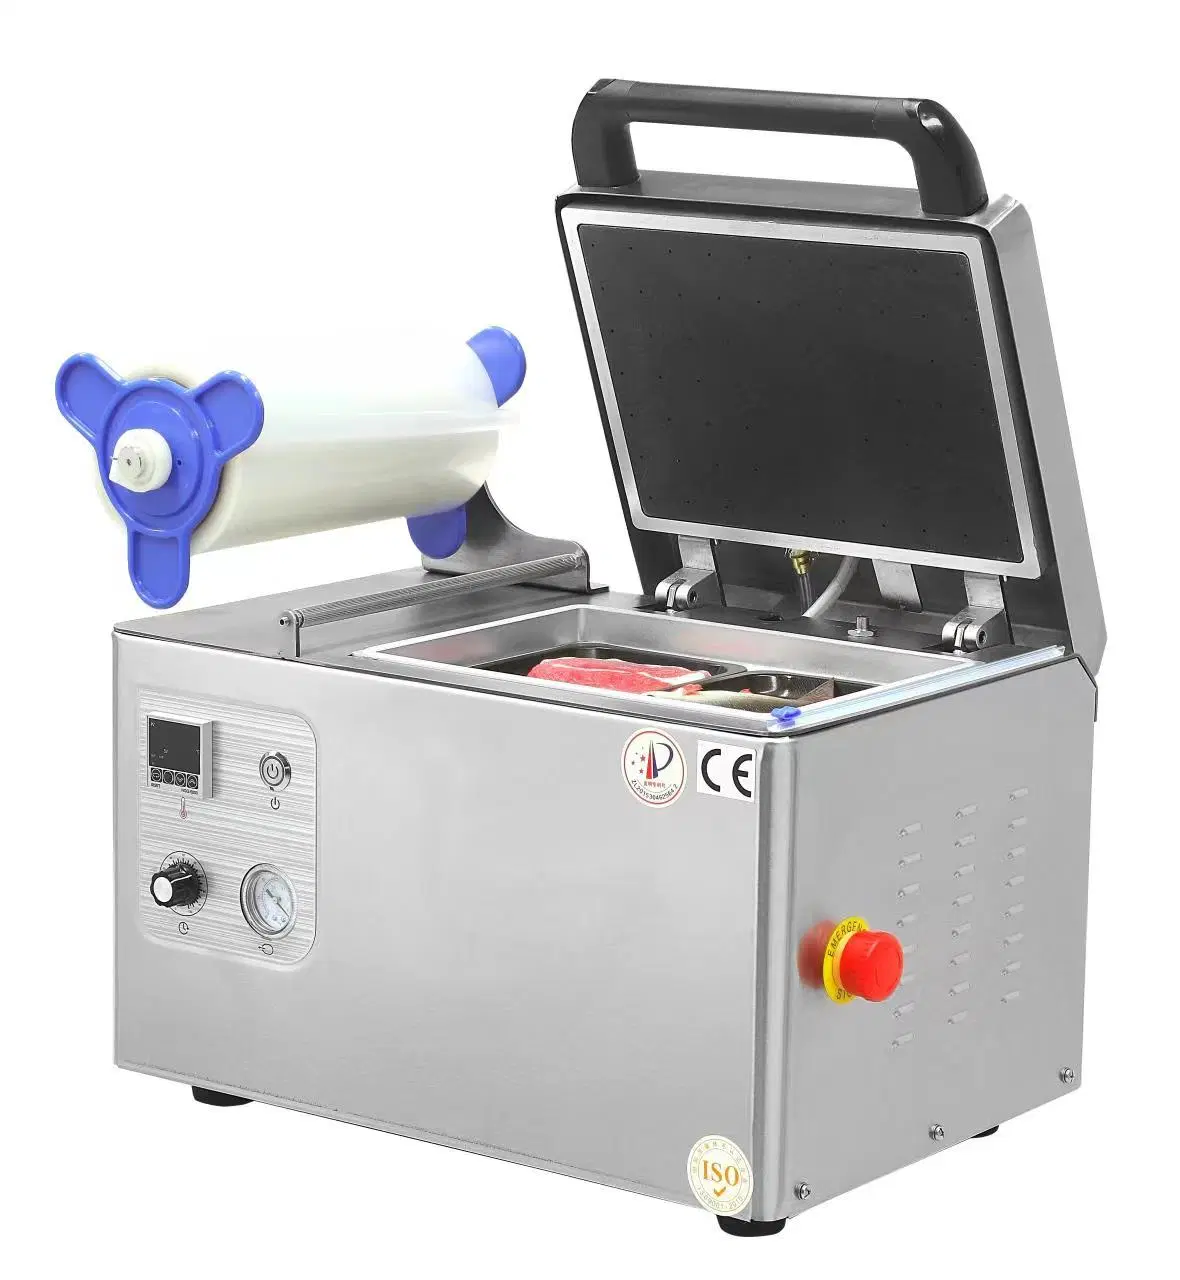 Kunba Kb-20 Vacuum Sealer Packaging Machine for Apparel Food Beverage Commodity Chemical